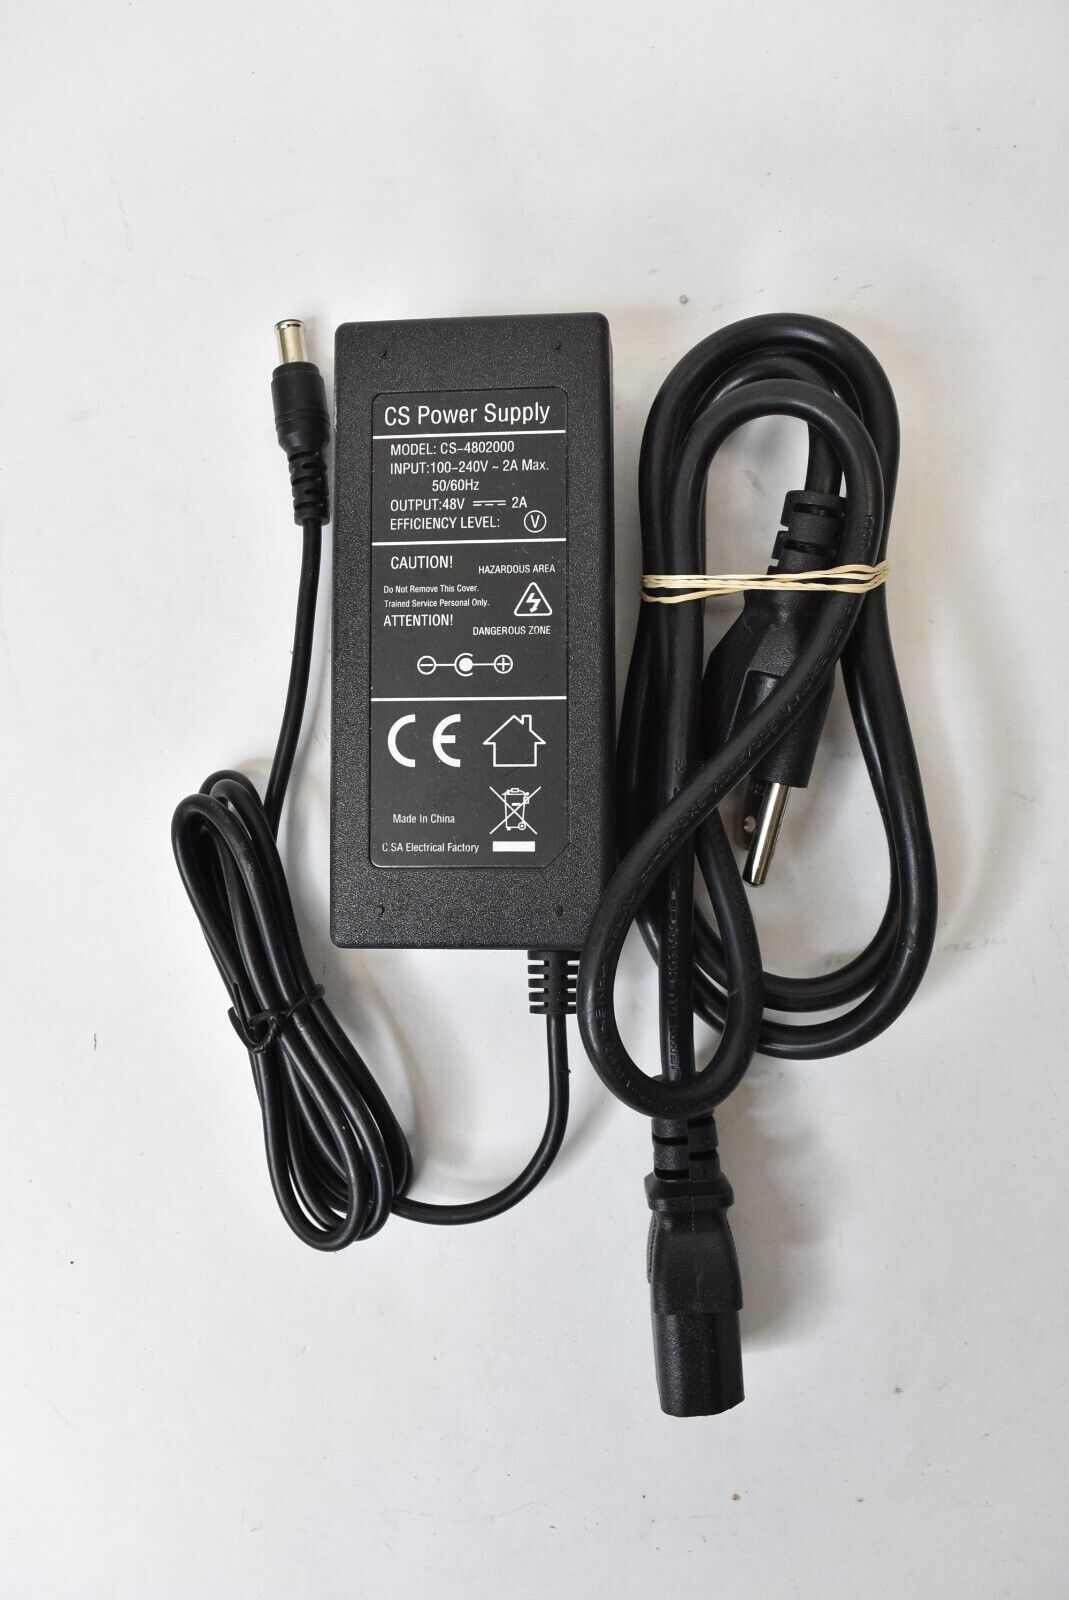 *Brand NEW* 48V 2A CS Power Supply Adapter Unit CS-4802000 - Click Image to Close